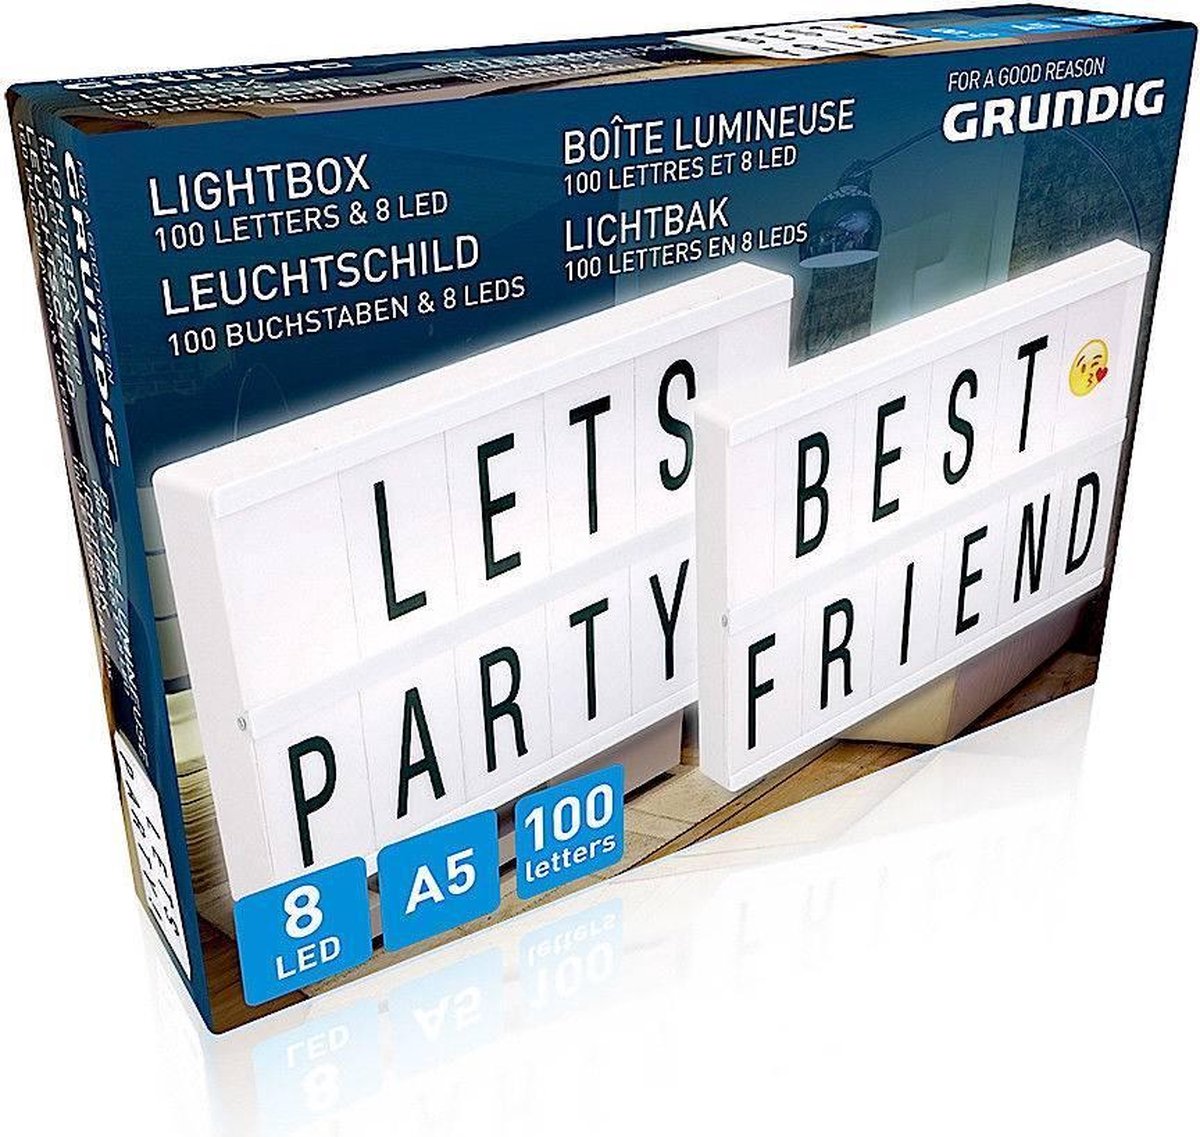 Grundig Lightbox A5 lichtbak met 100 letters | bol.com